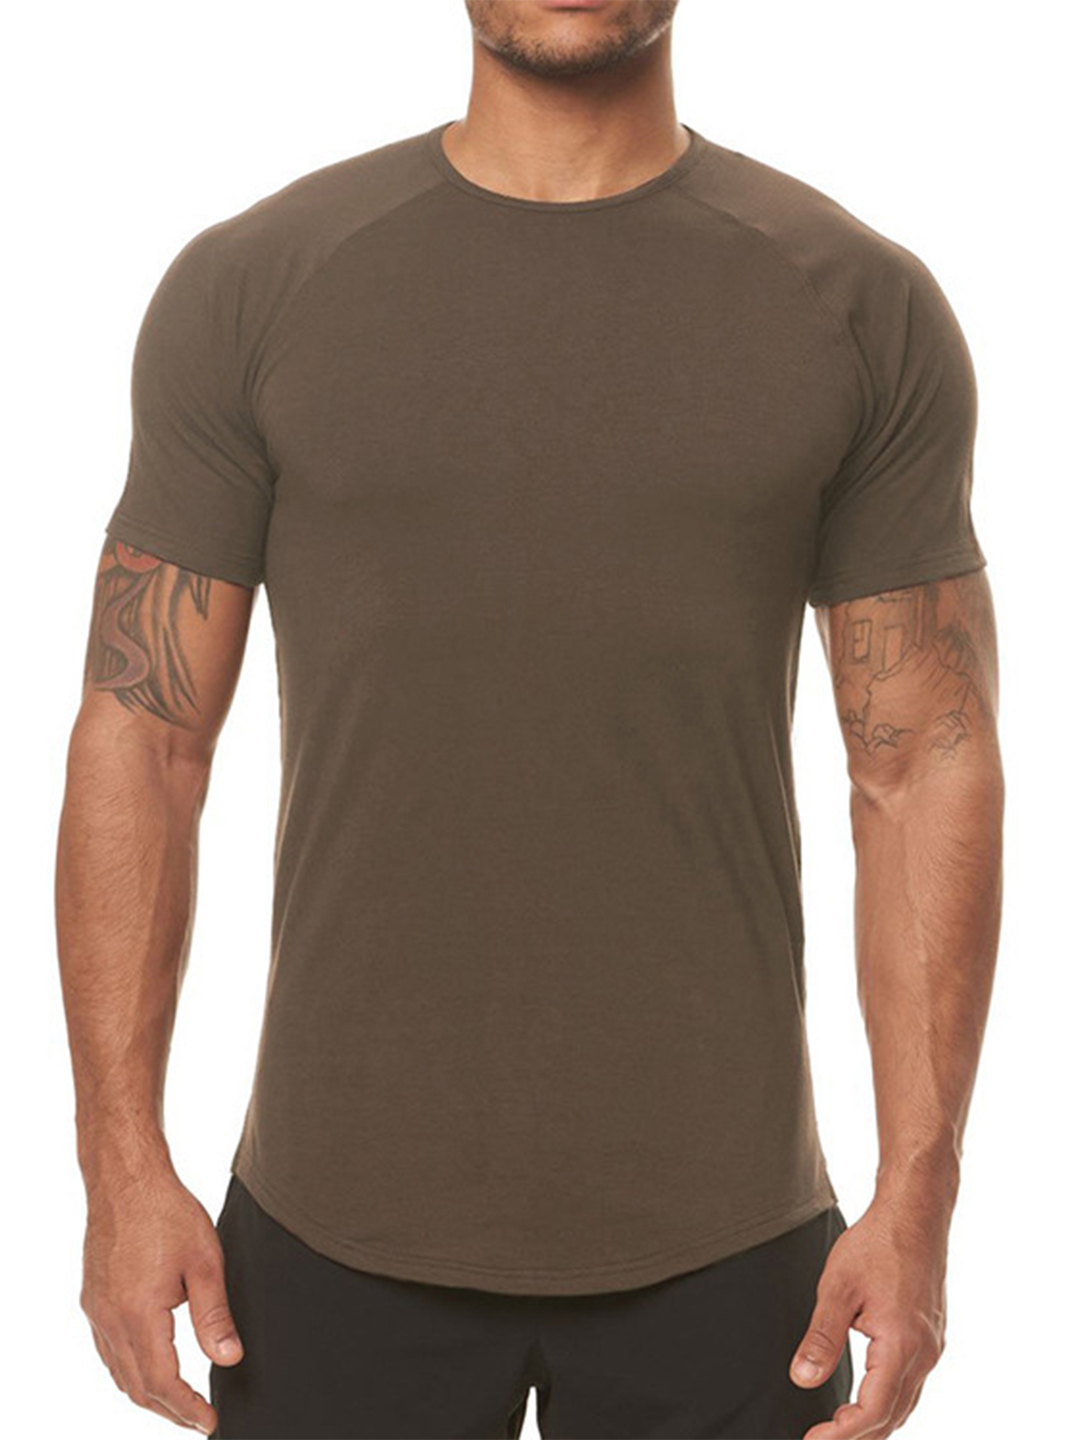 Men's Plain Short Sleeve T-shirt